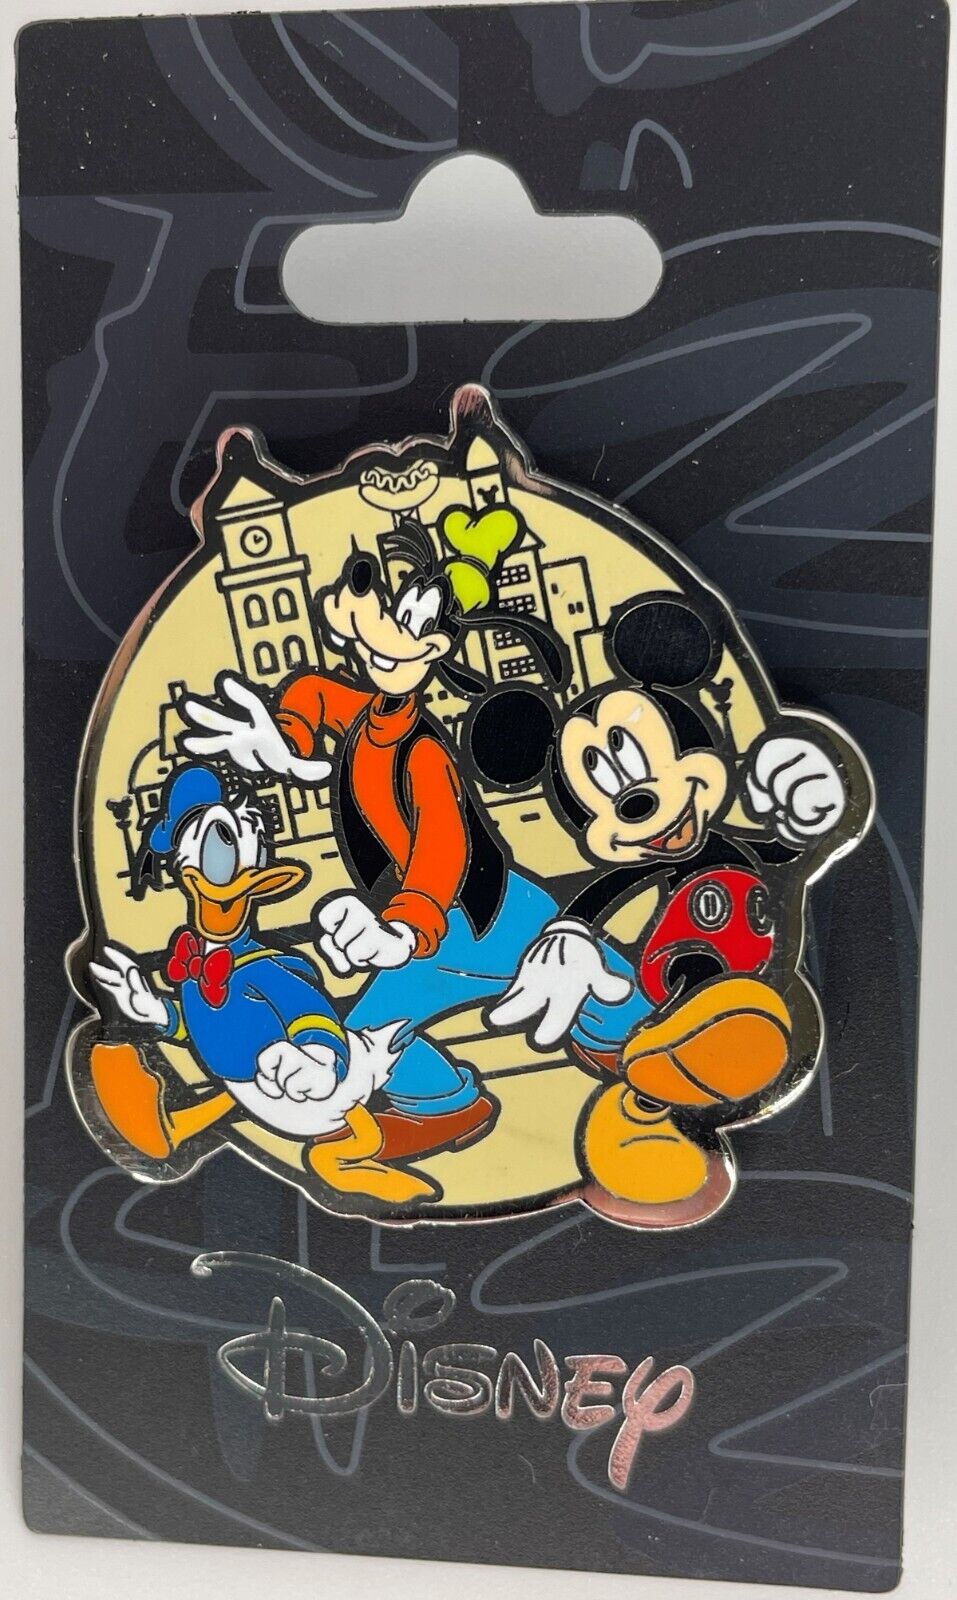 Disney Pin - Mickey Mouse, Goofy & Donald Duck  - New